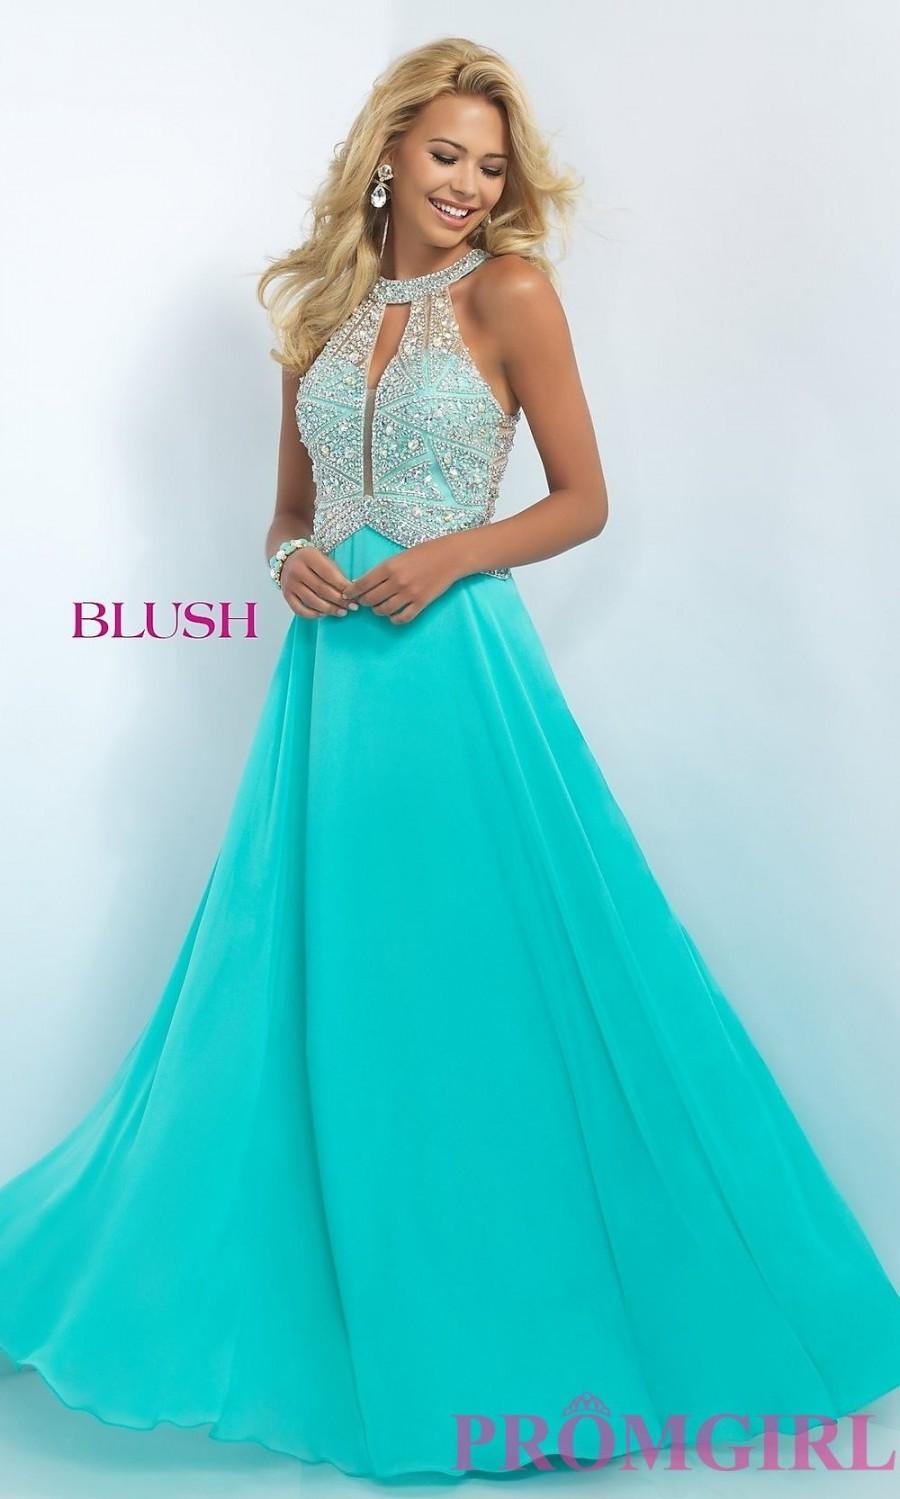 Hochzeit - Embellished Illusion Bodice Floor Length Chiffon Dress by Blush - Discount Evening Dresses 